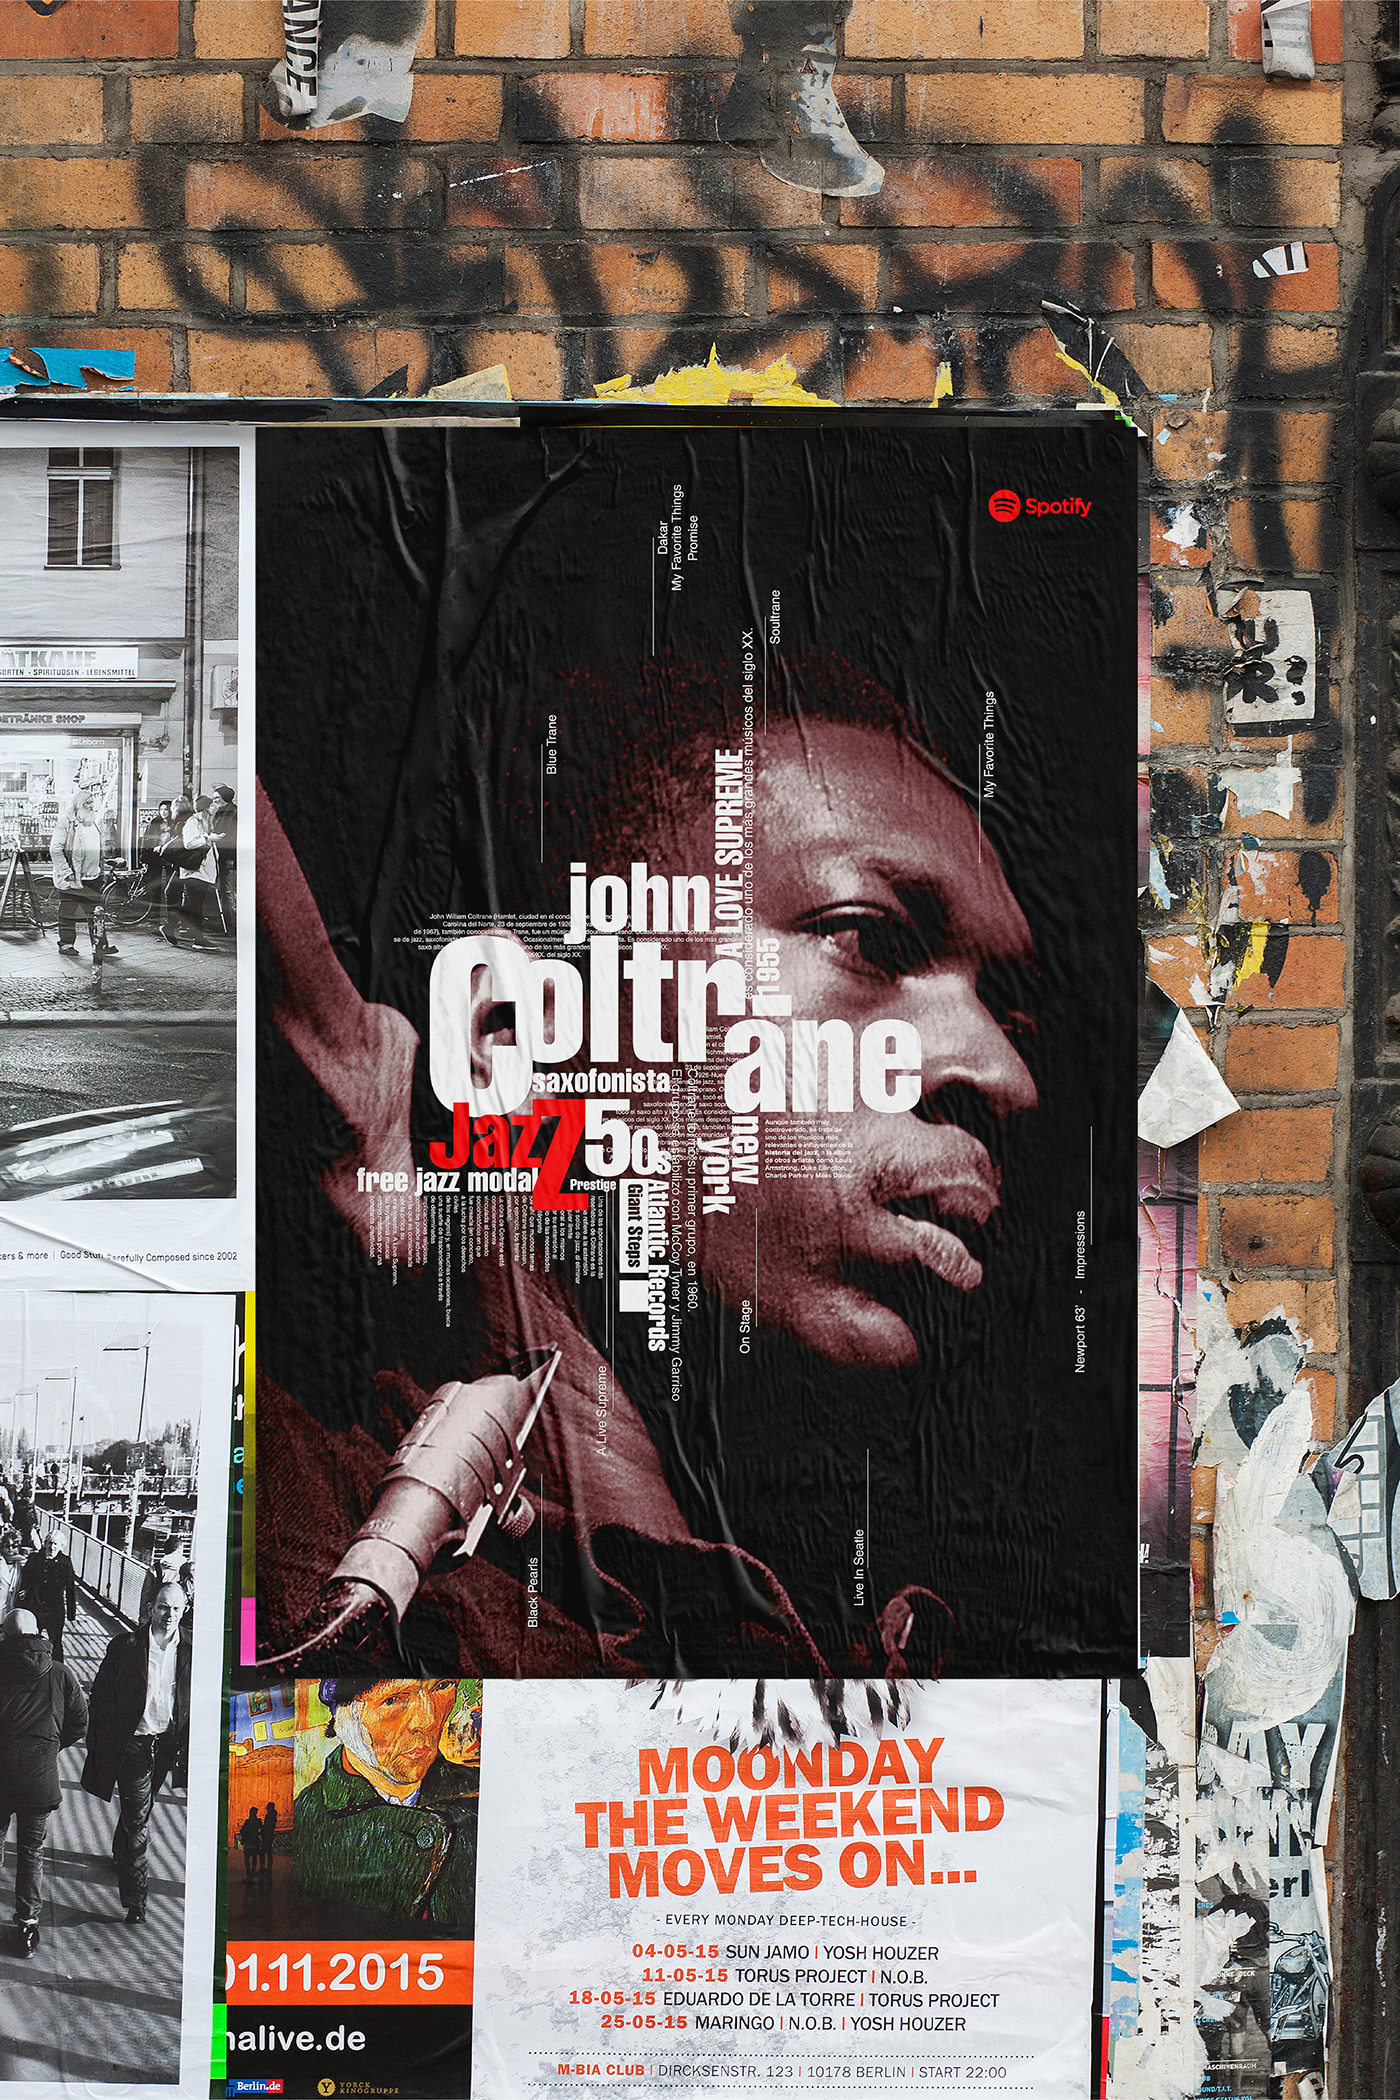 spotify poster cartel jazz posmodernismo postmodernism New Wave John Coltrane typographic graphicdesign